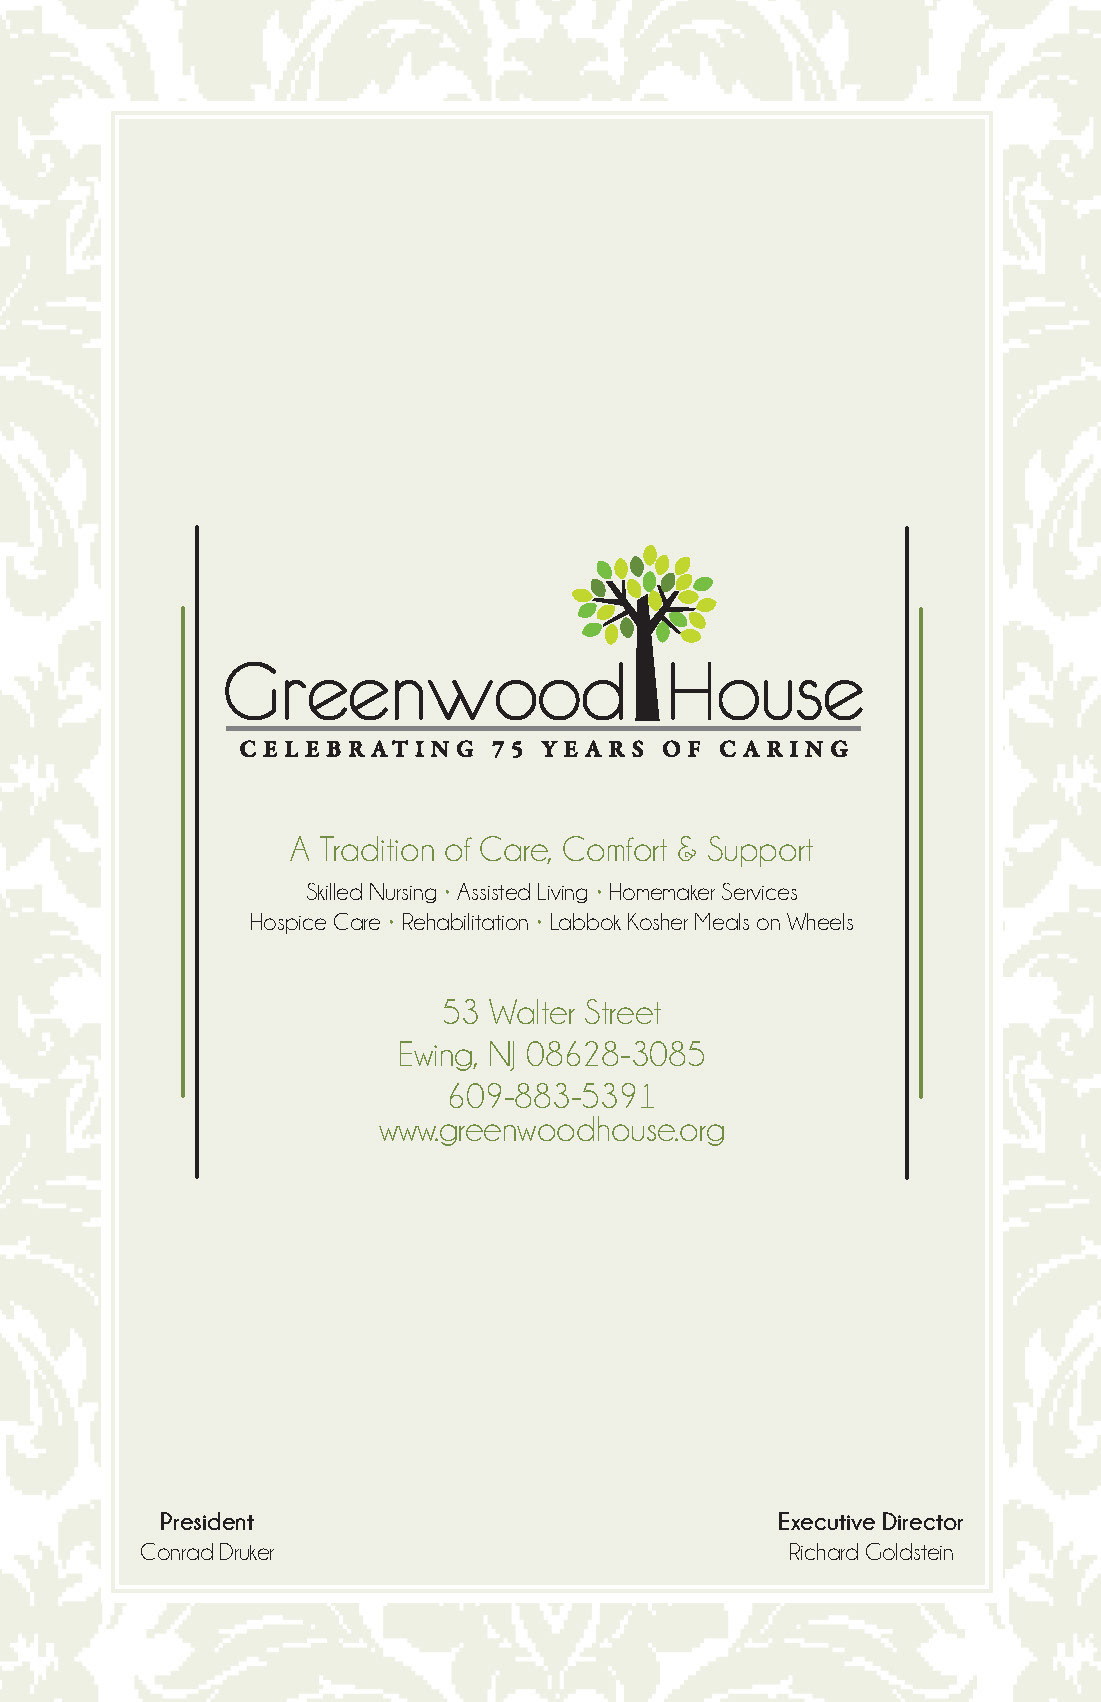 greenwoodhouse benefit